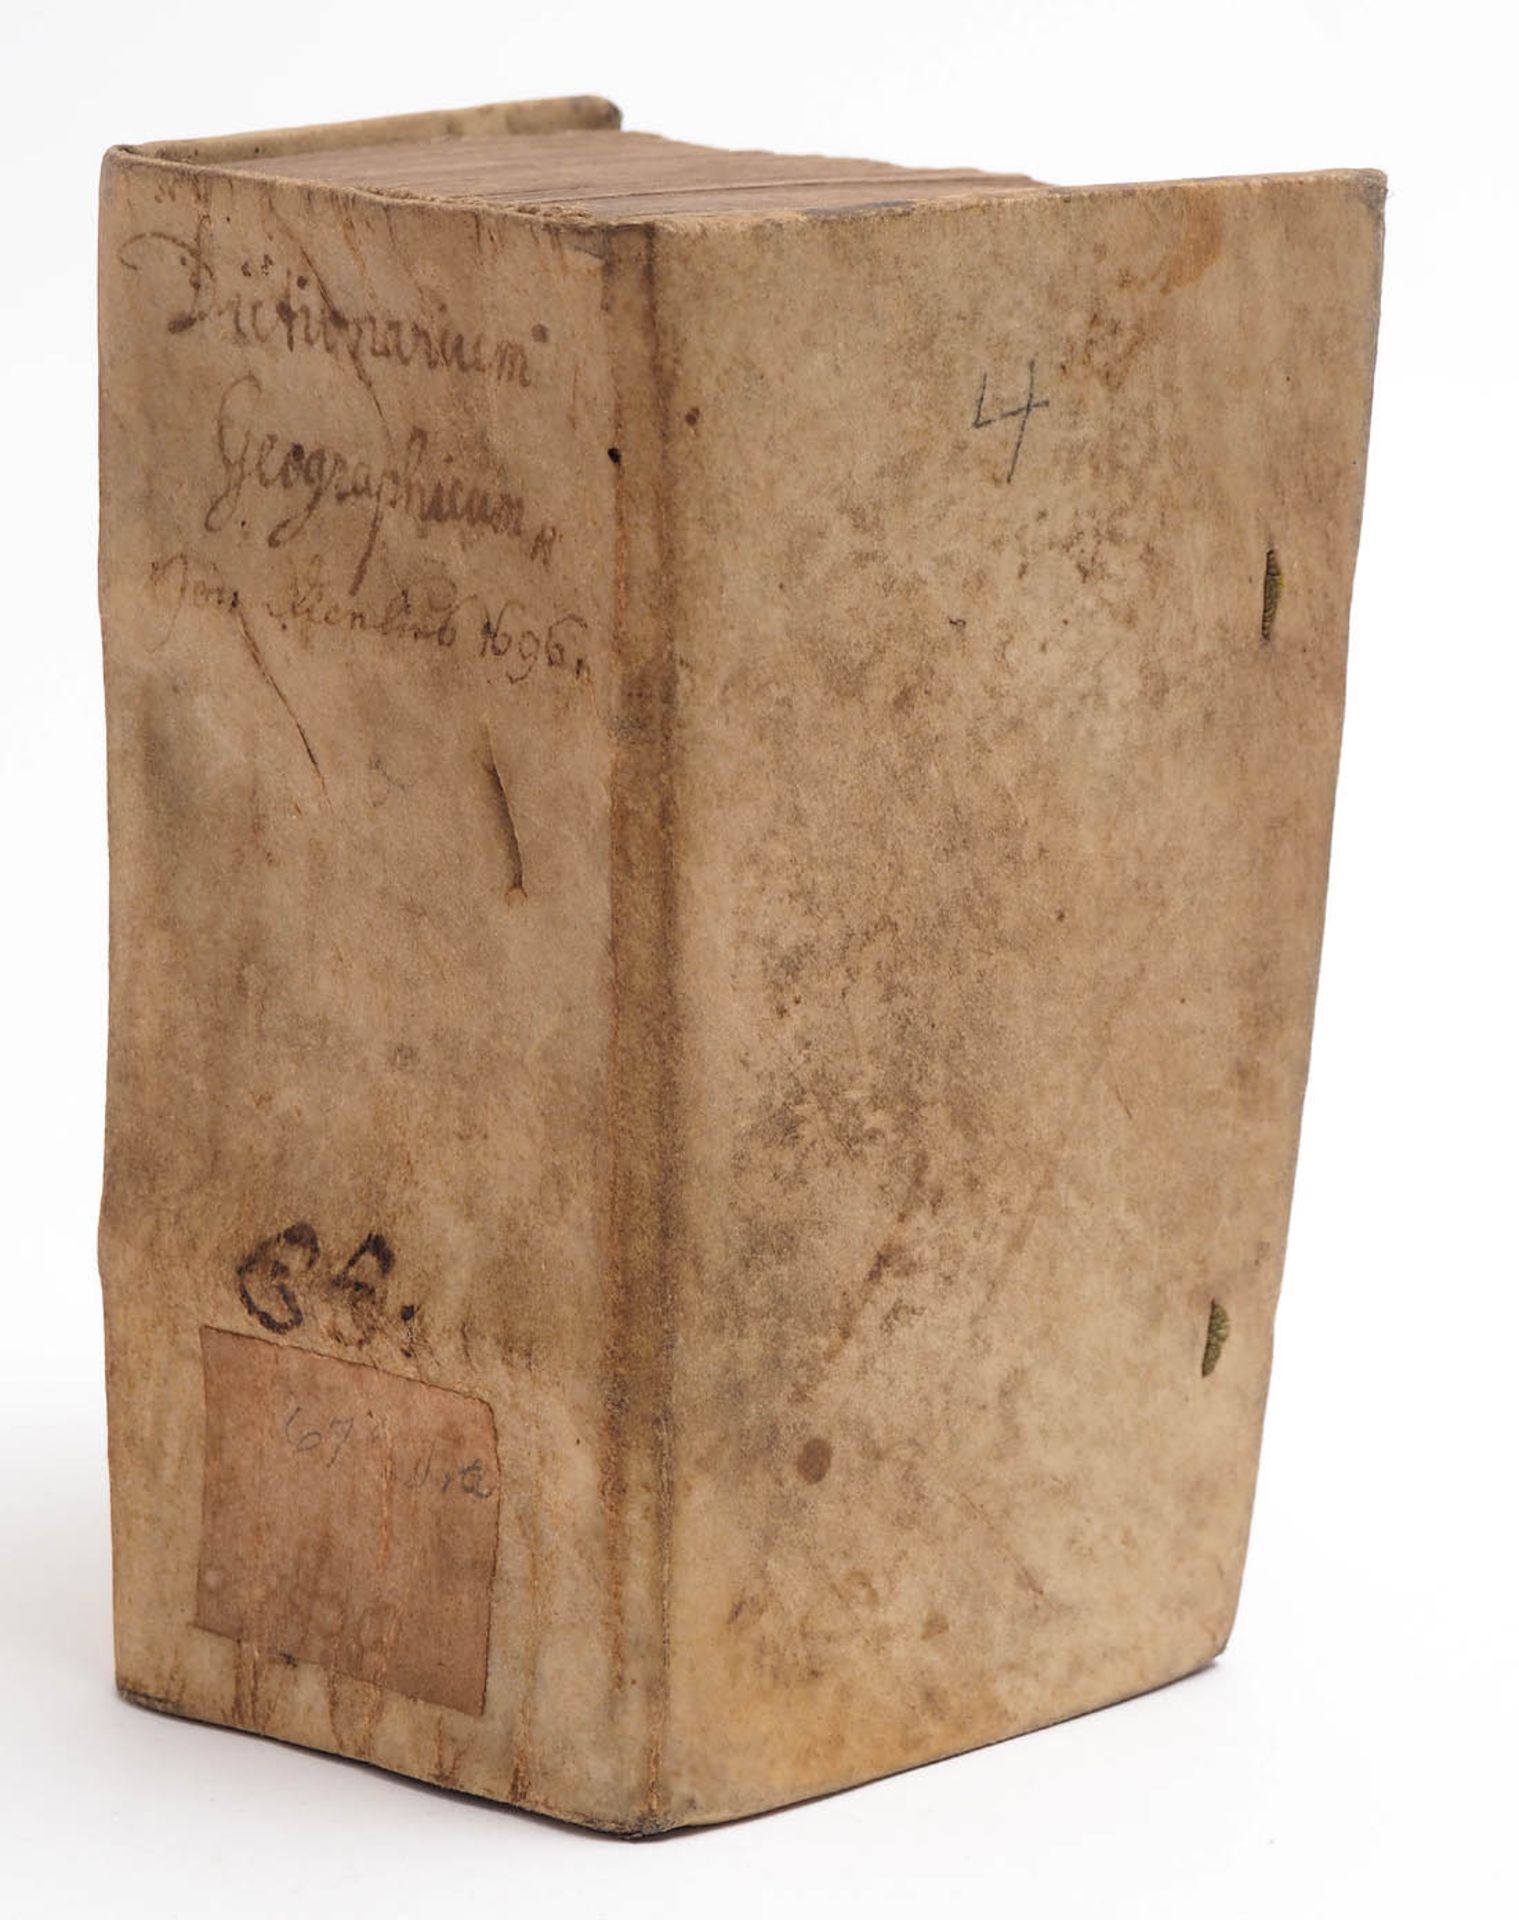 Hieronymus Dicelius, 1696, Geographisches Dictionarium "Geographisches Dictionarium, darinnen die